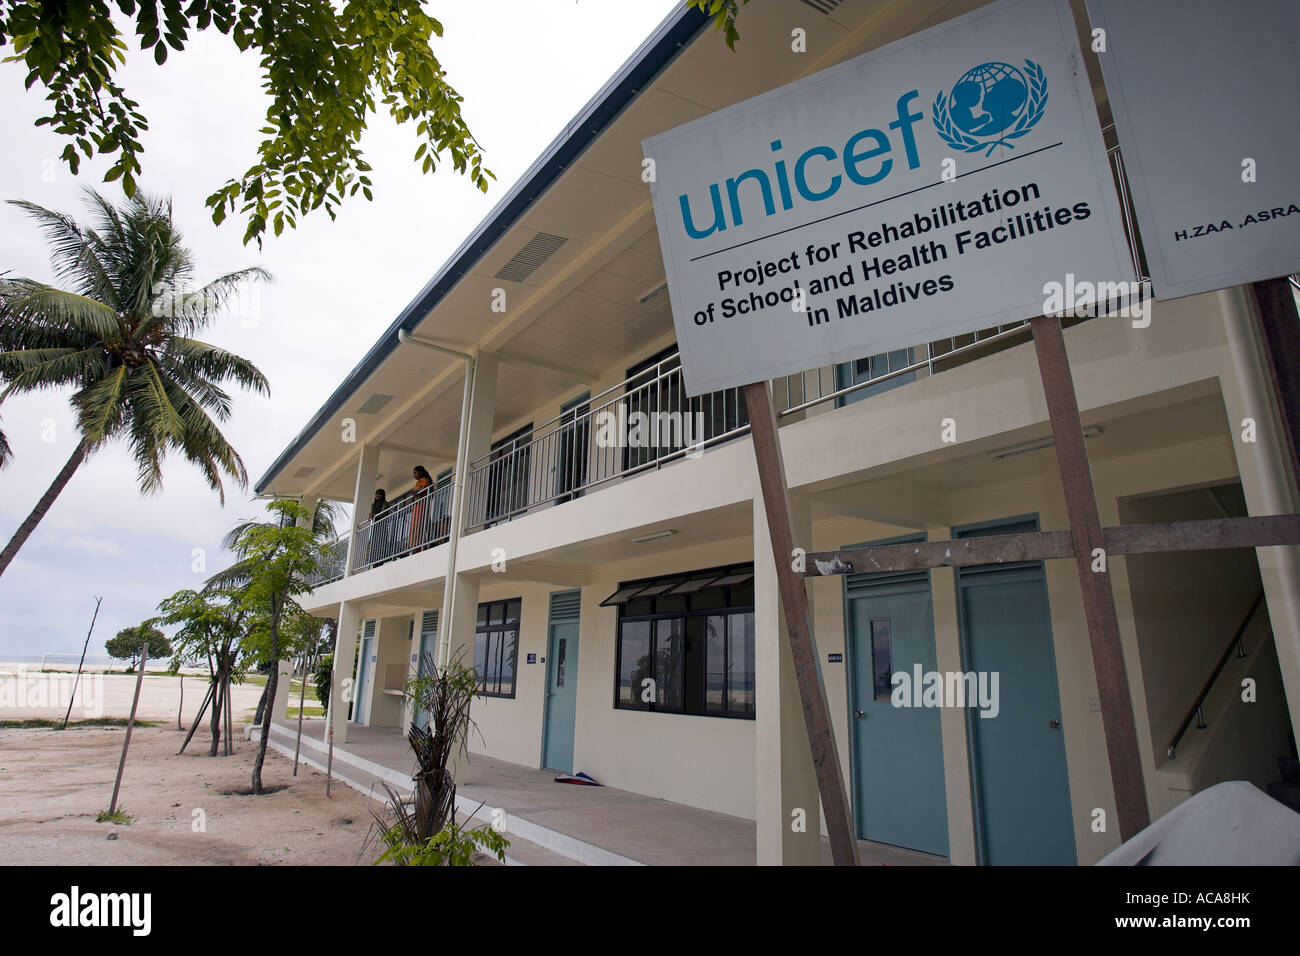 School on the Maldives promoted by UNICEF, Maldives Stock Photo